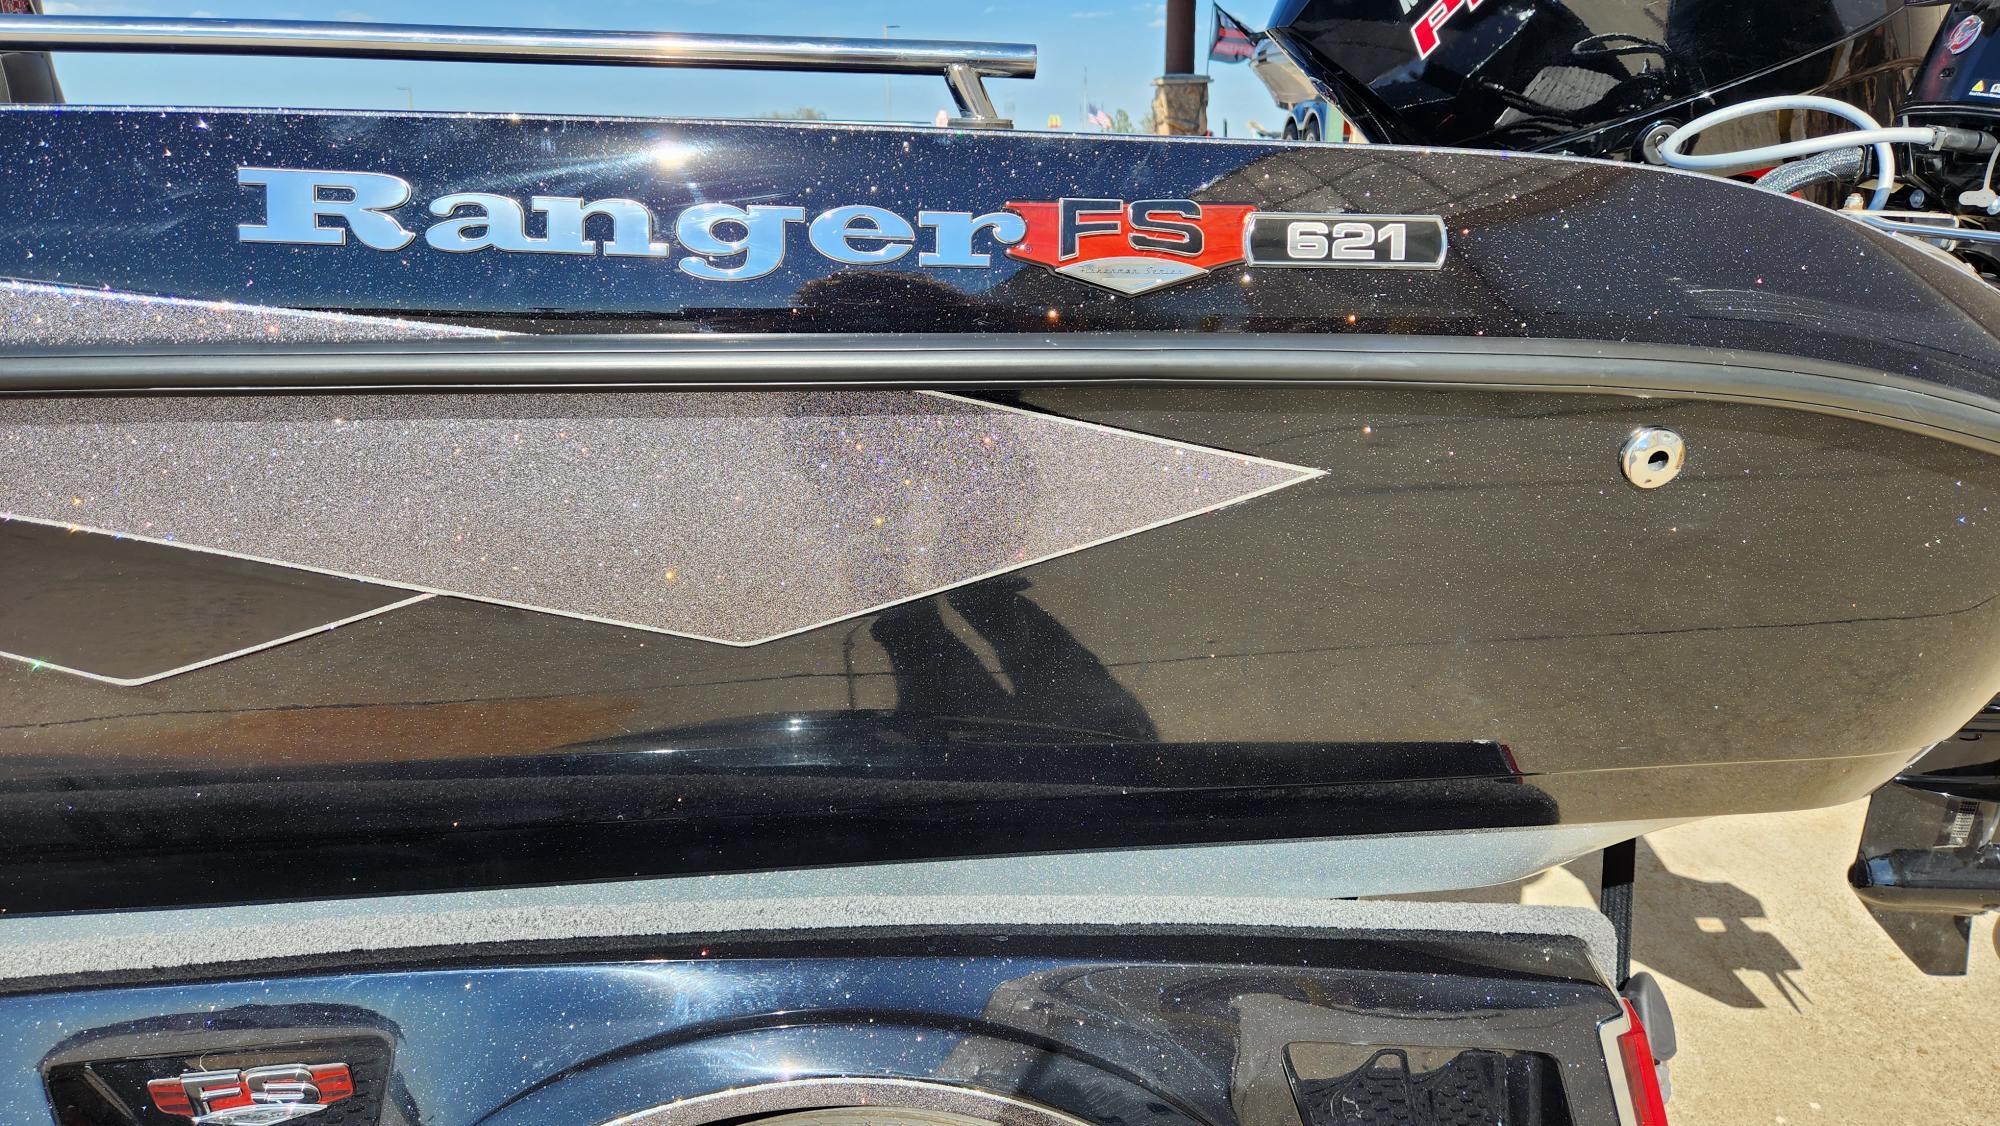 2024 Ranger 621FS Ranger Cup Equipped